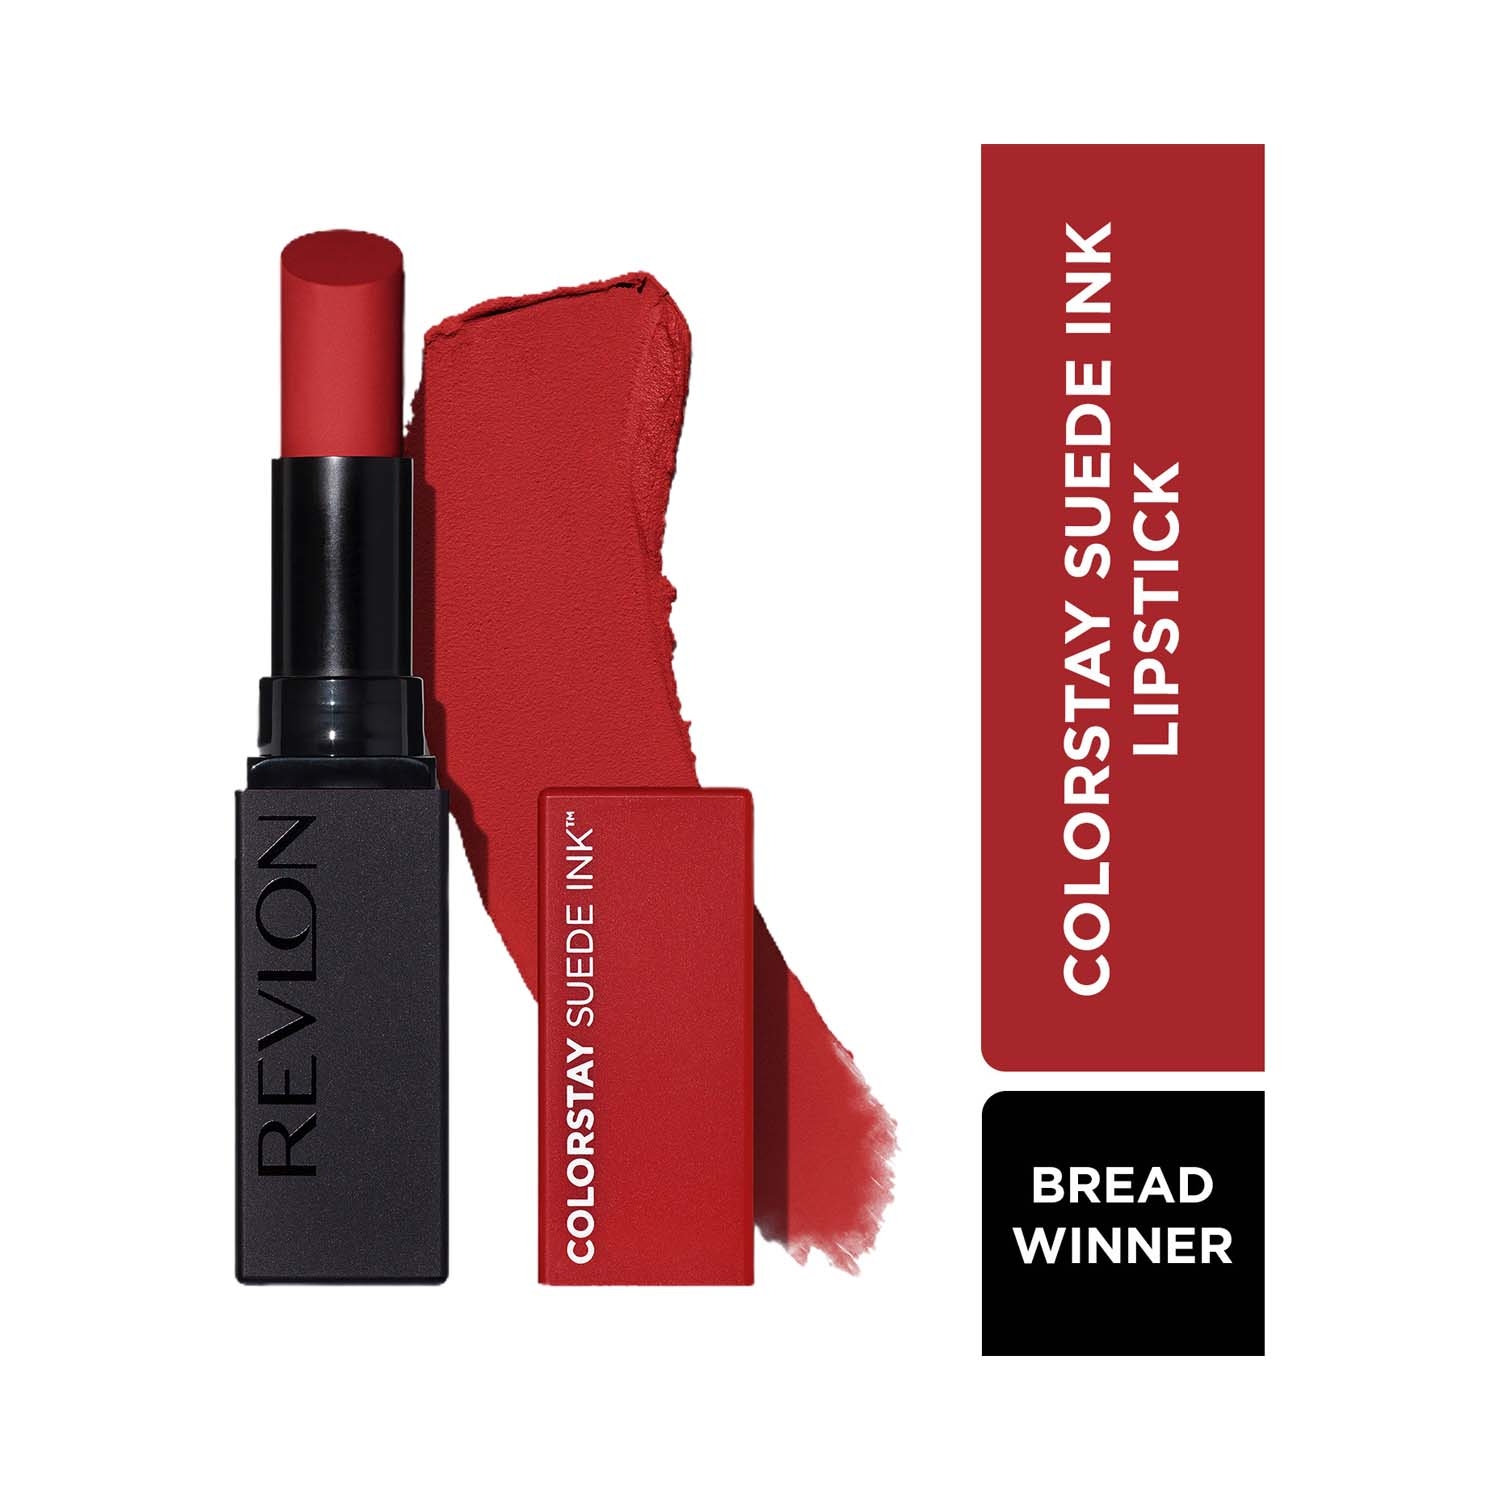 Revlon | Revlon Colorstay Suede Ink Lipstick - 016 Bread Winner (2.5g)